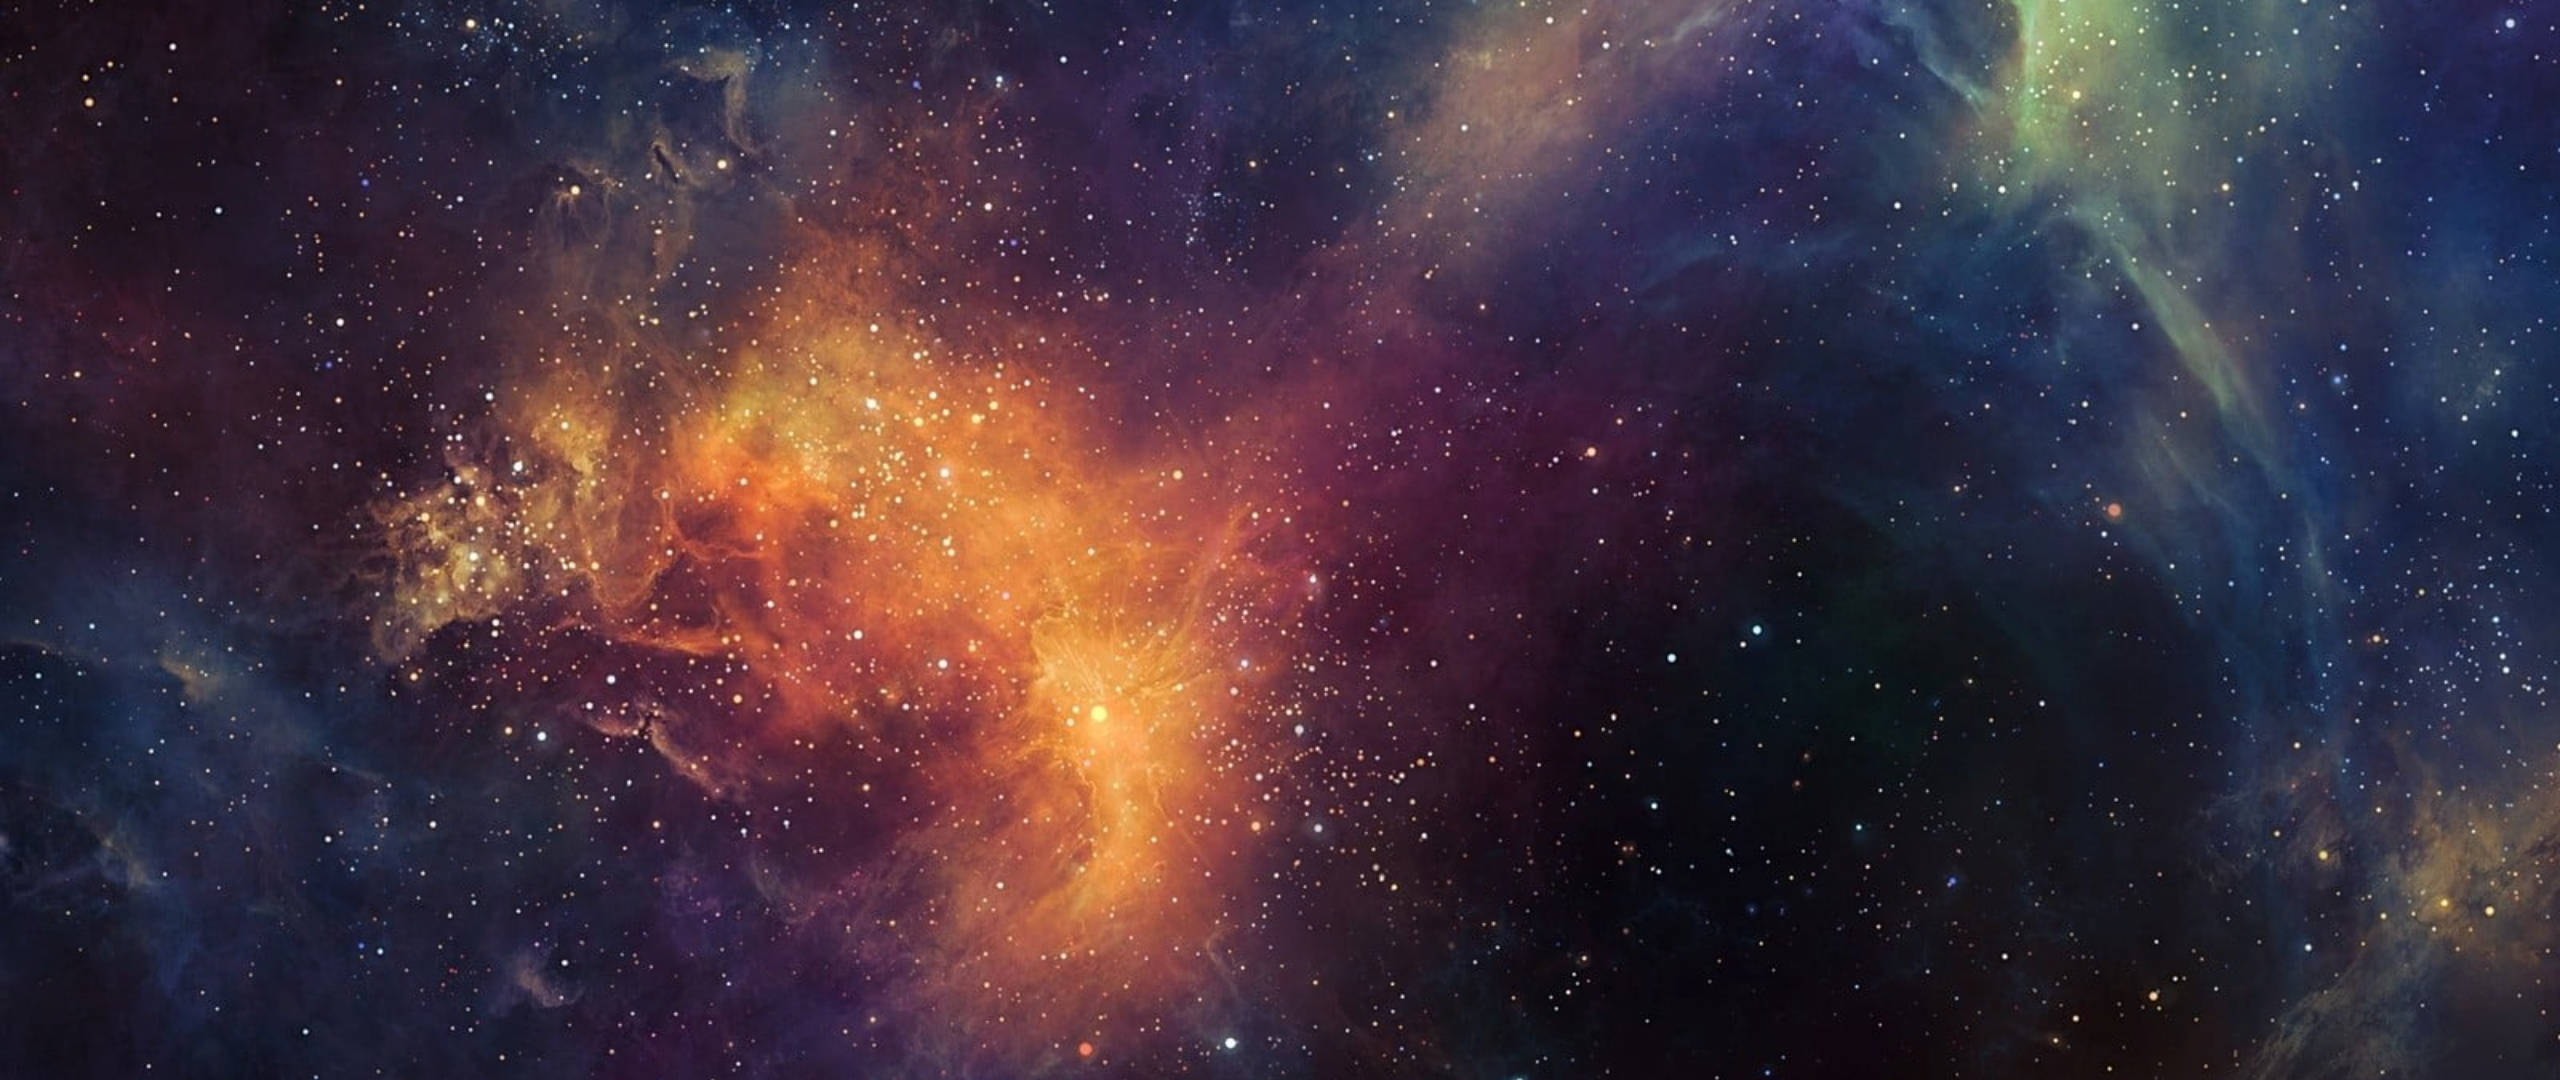 Free Nebula Wallpaper Downloads, [200+] Nebula Wallpapers for FREE |  